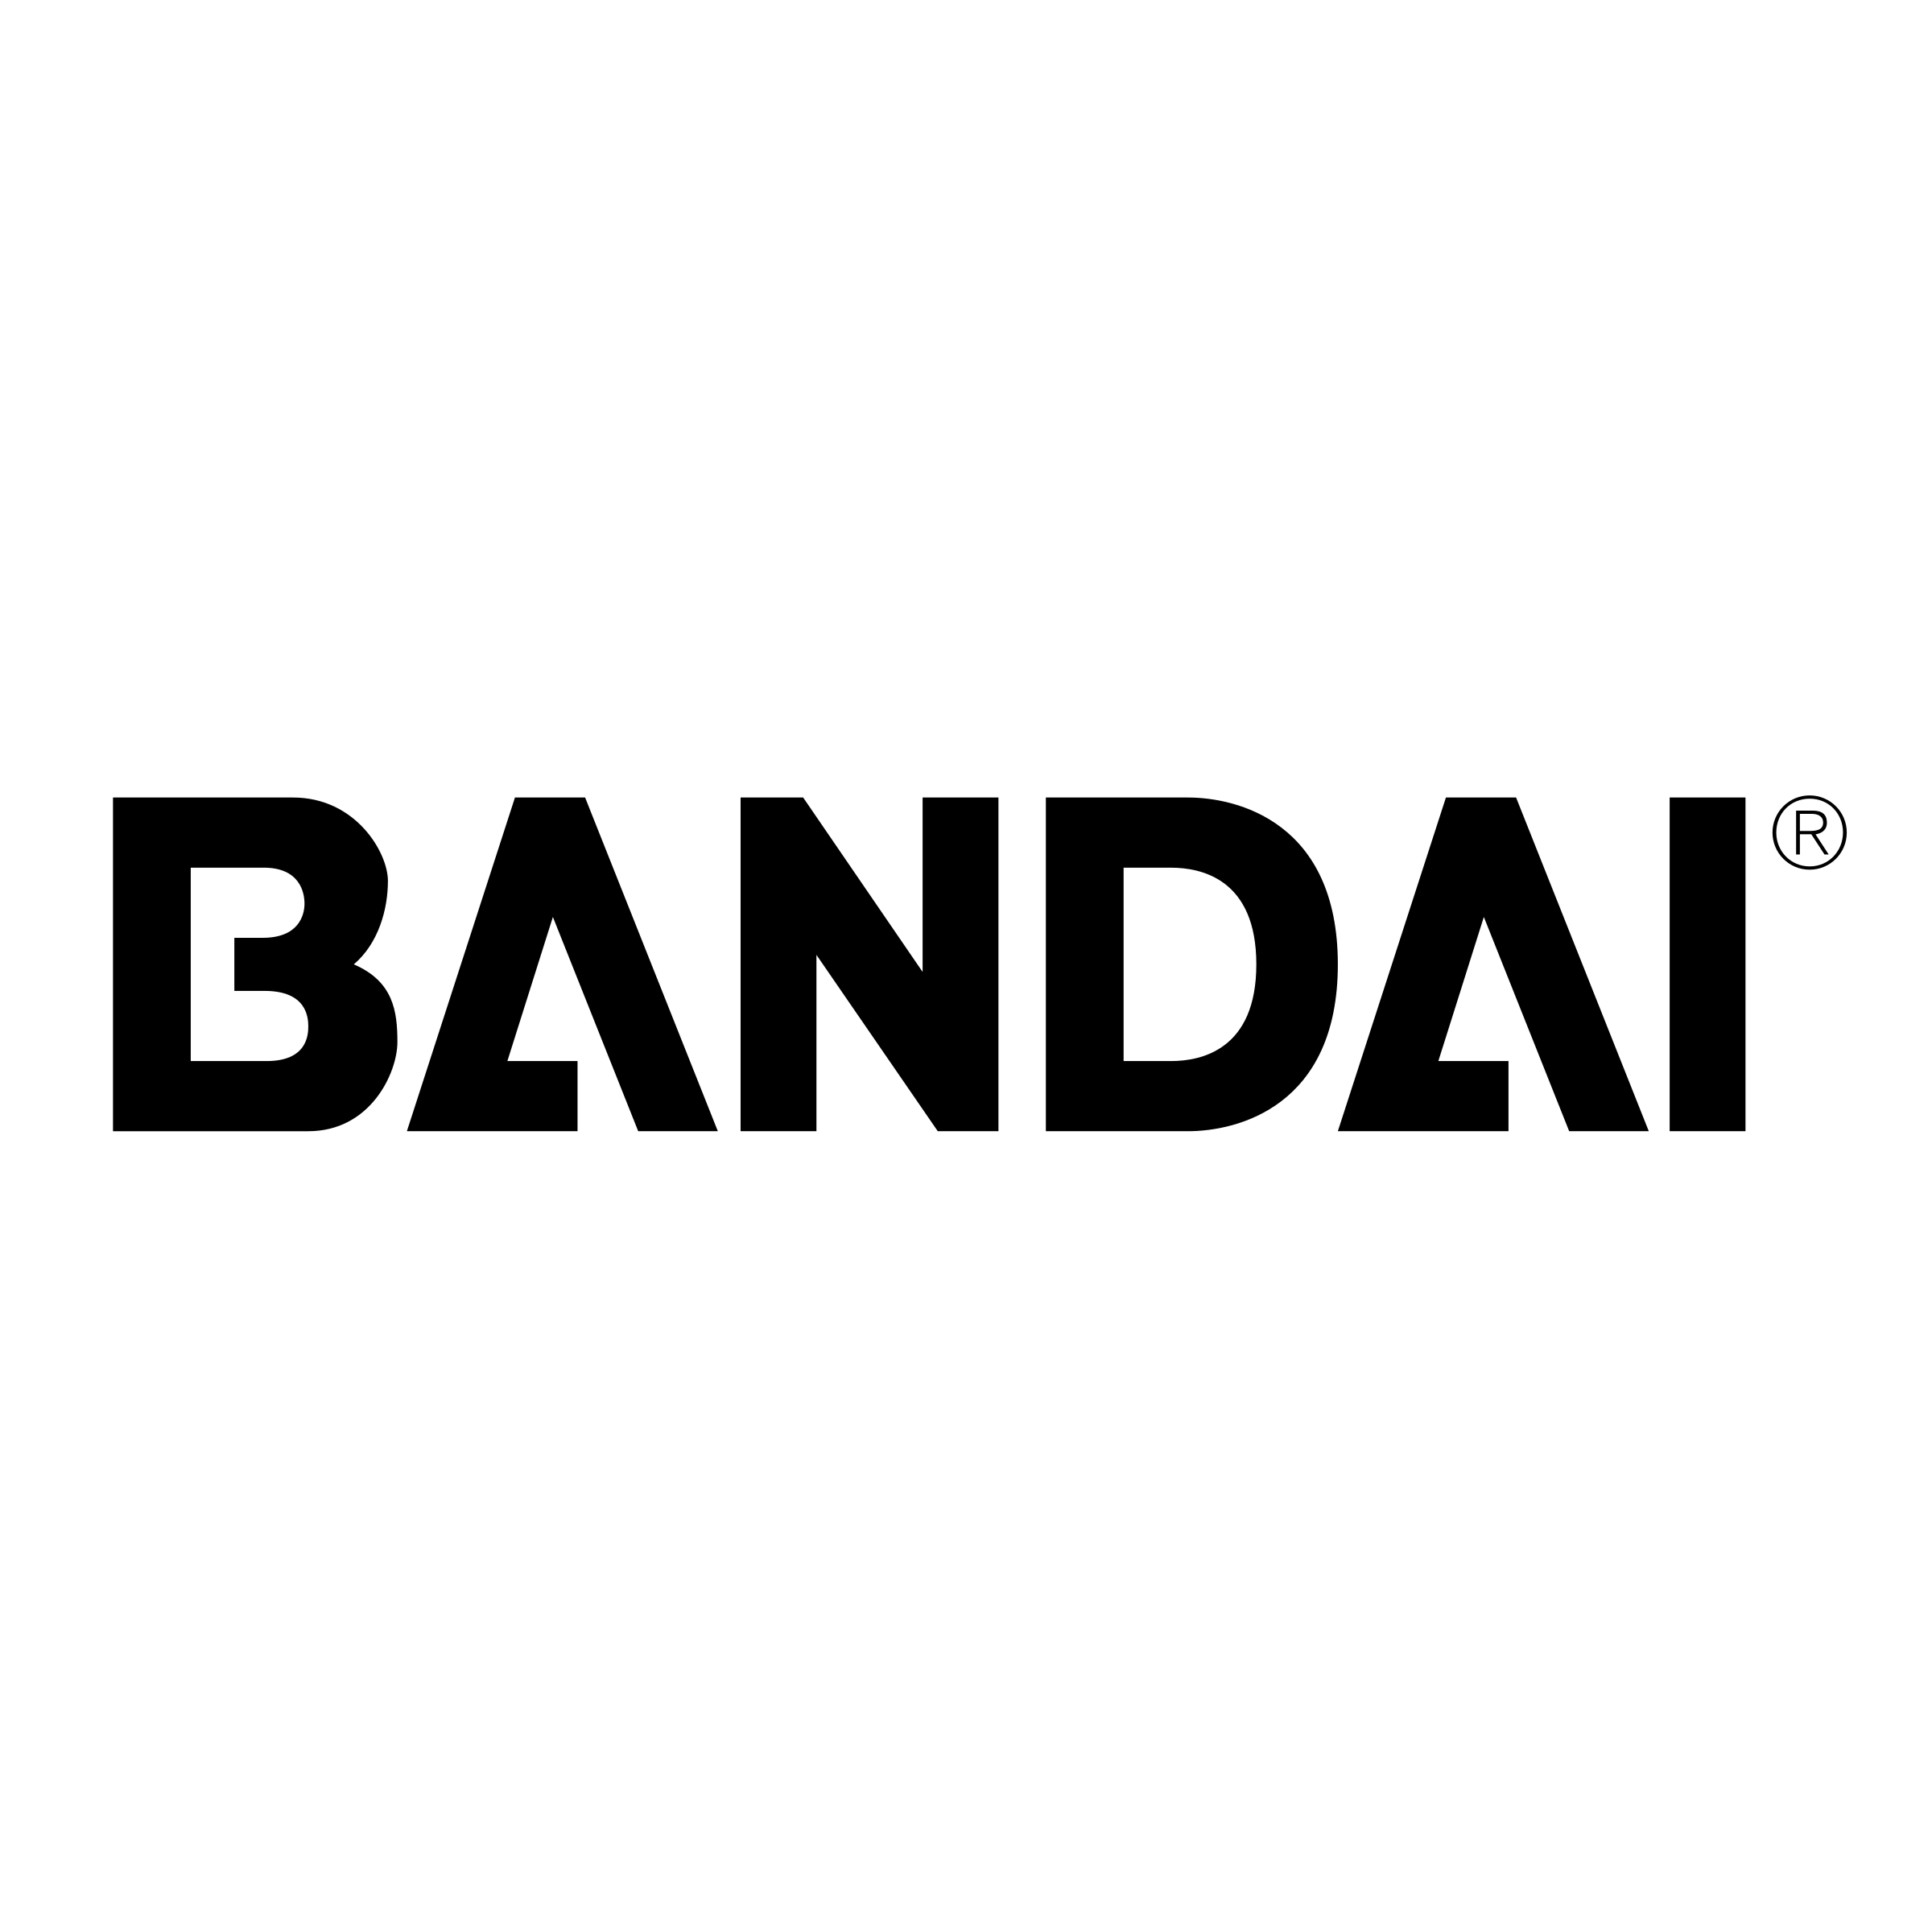 Bandai Logo - Bandai 01 Logo PNG Transparent & SVG Vector